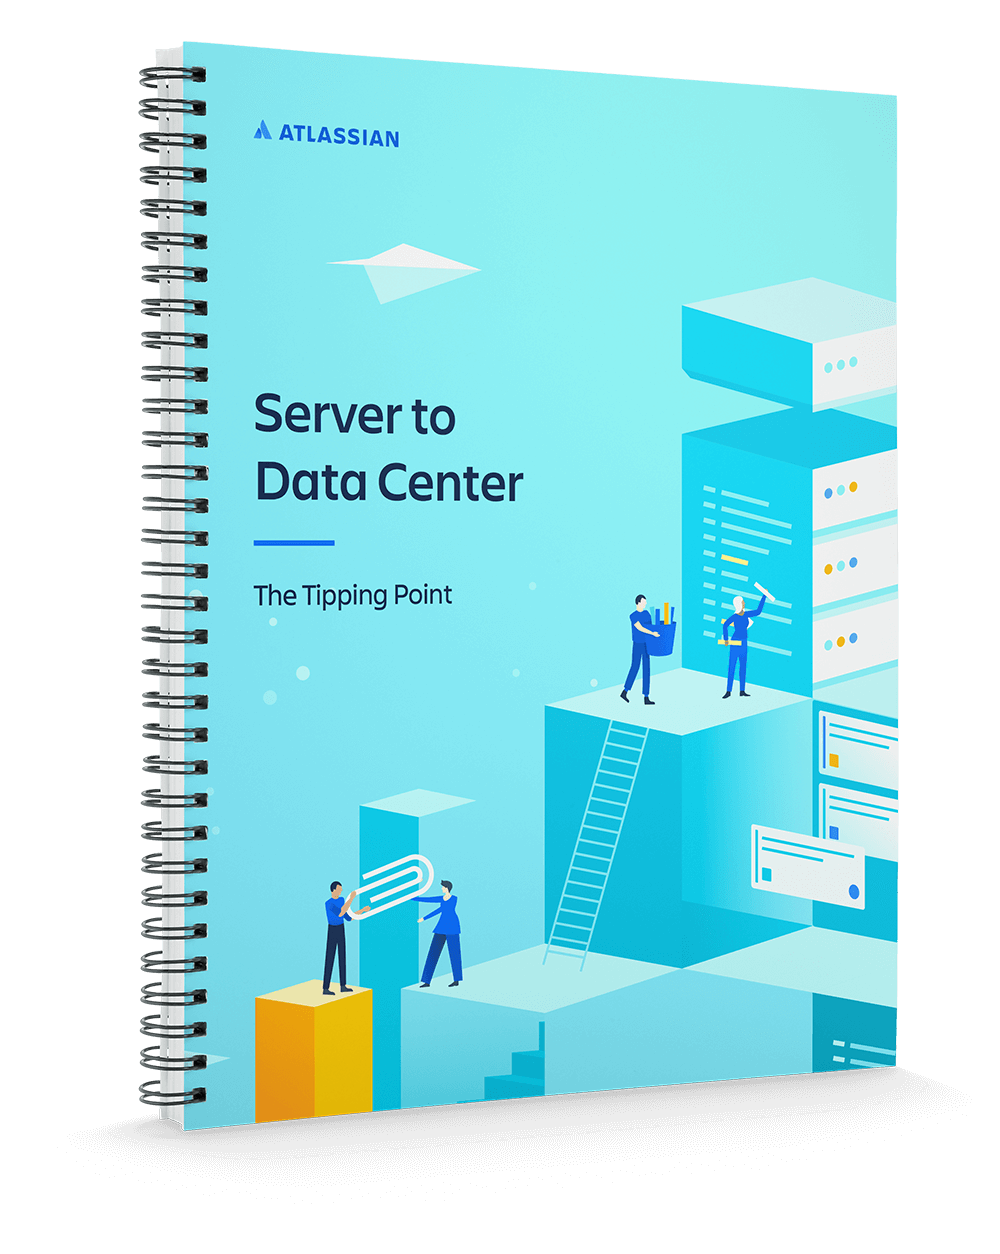 Обложка книги «С версии Server на Data Center» в формате PDF